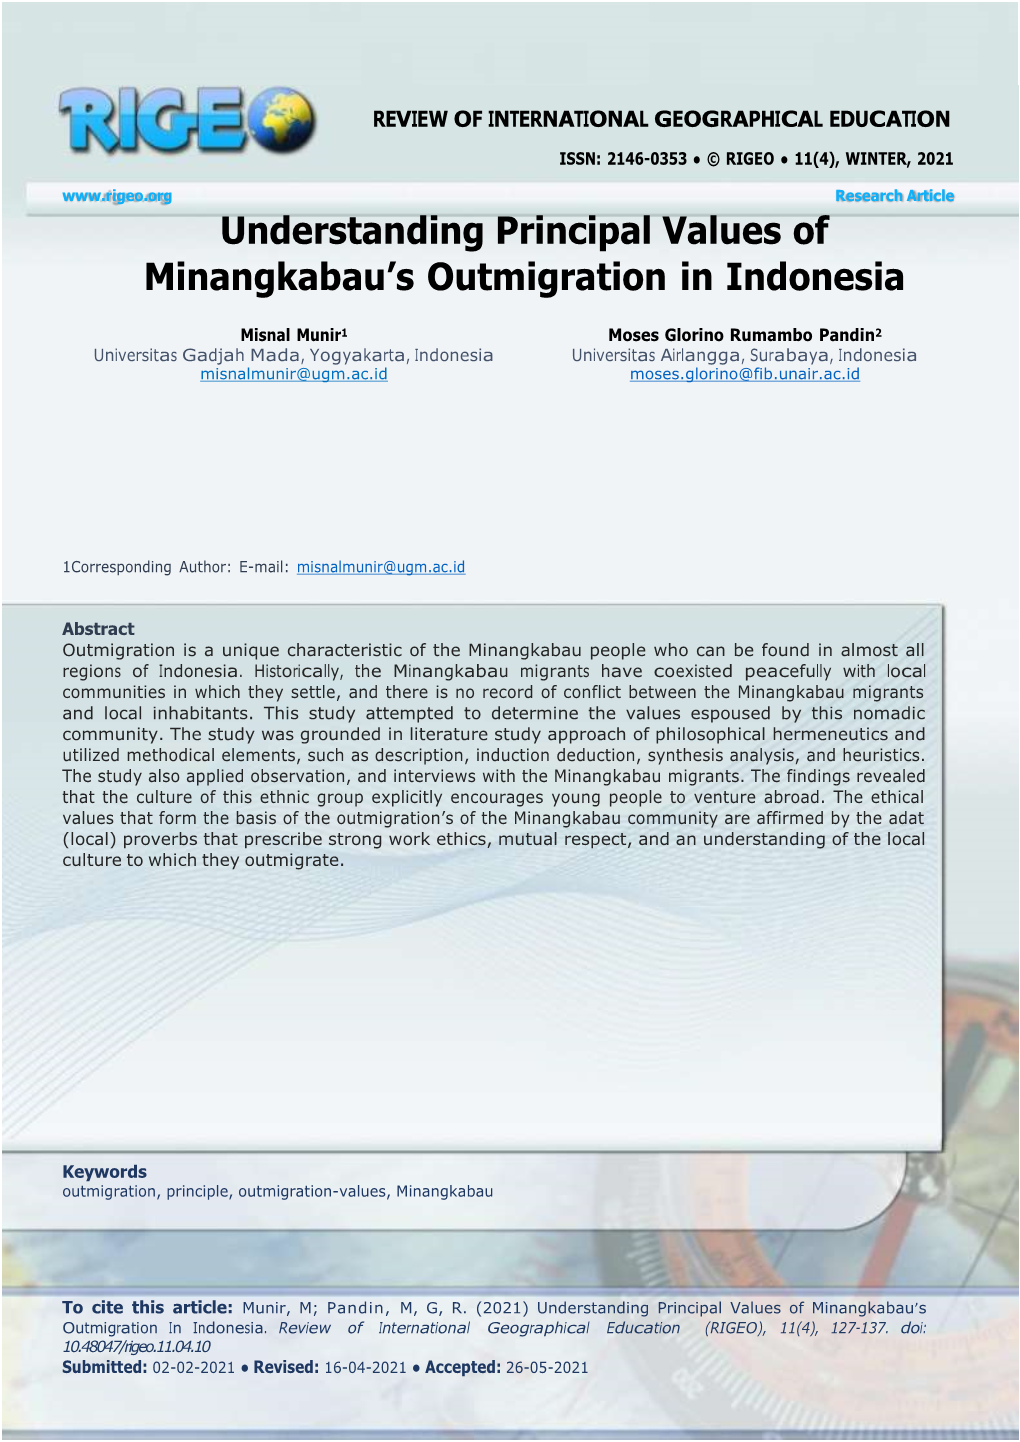 Understanding Principal Values of Minangkabau's Outmigration In